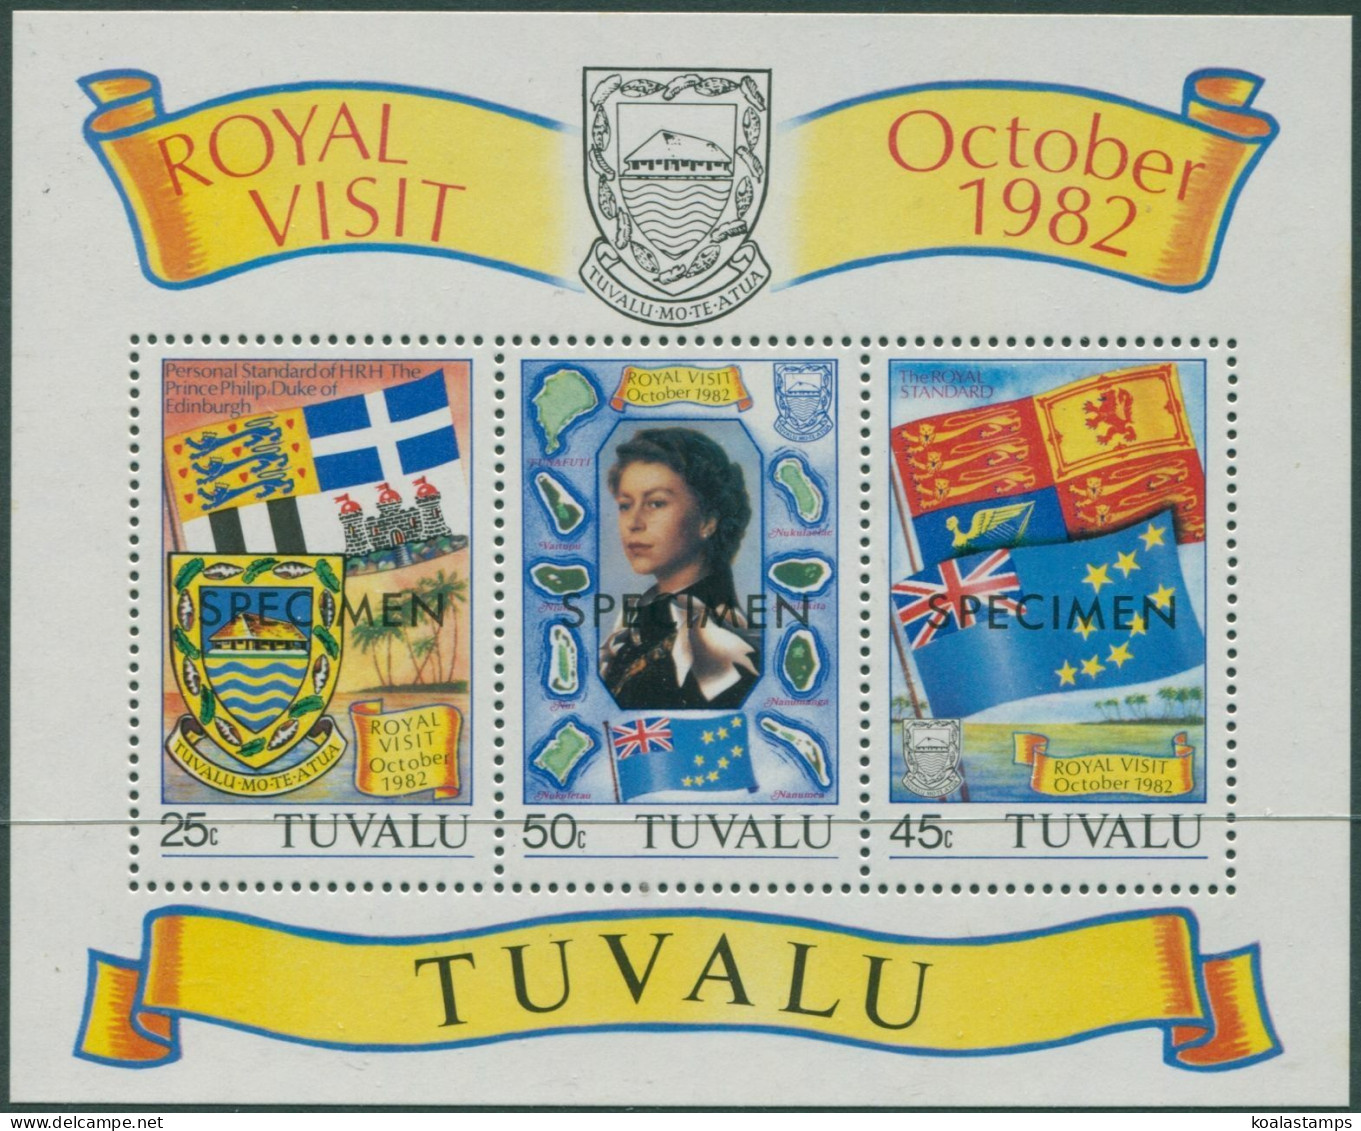 Tuvalu 1982 SG199 Royal Visit SPECIMEN MS MNH - Tuvalu